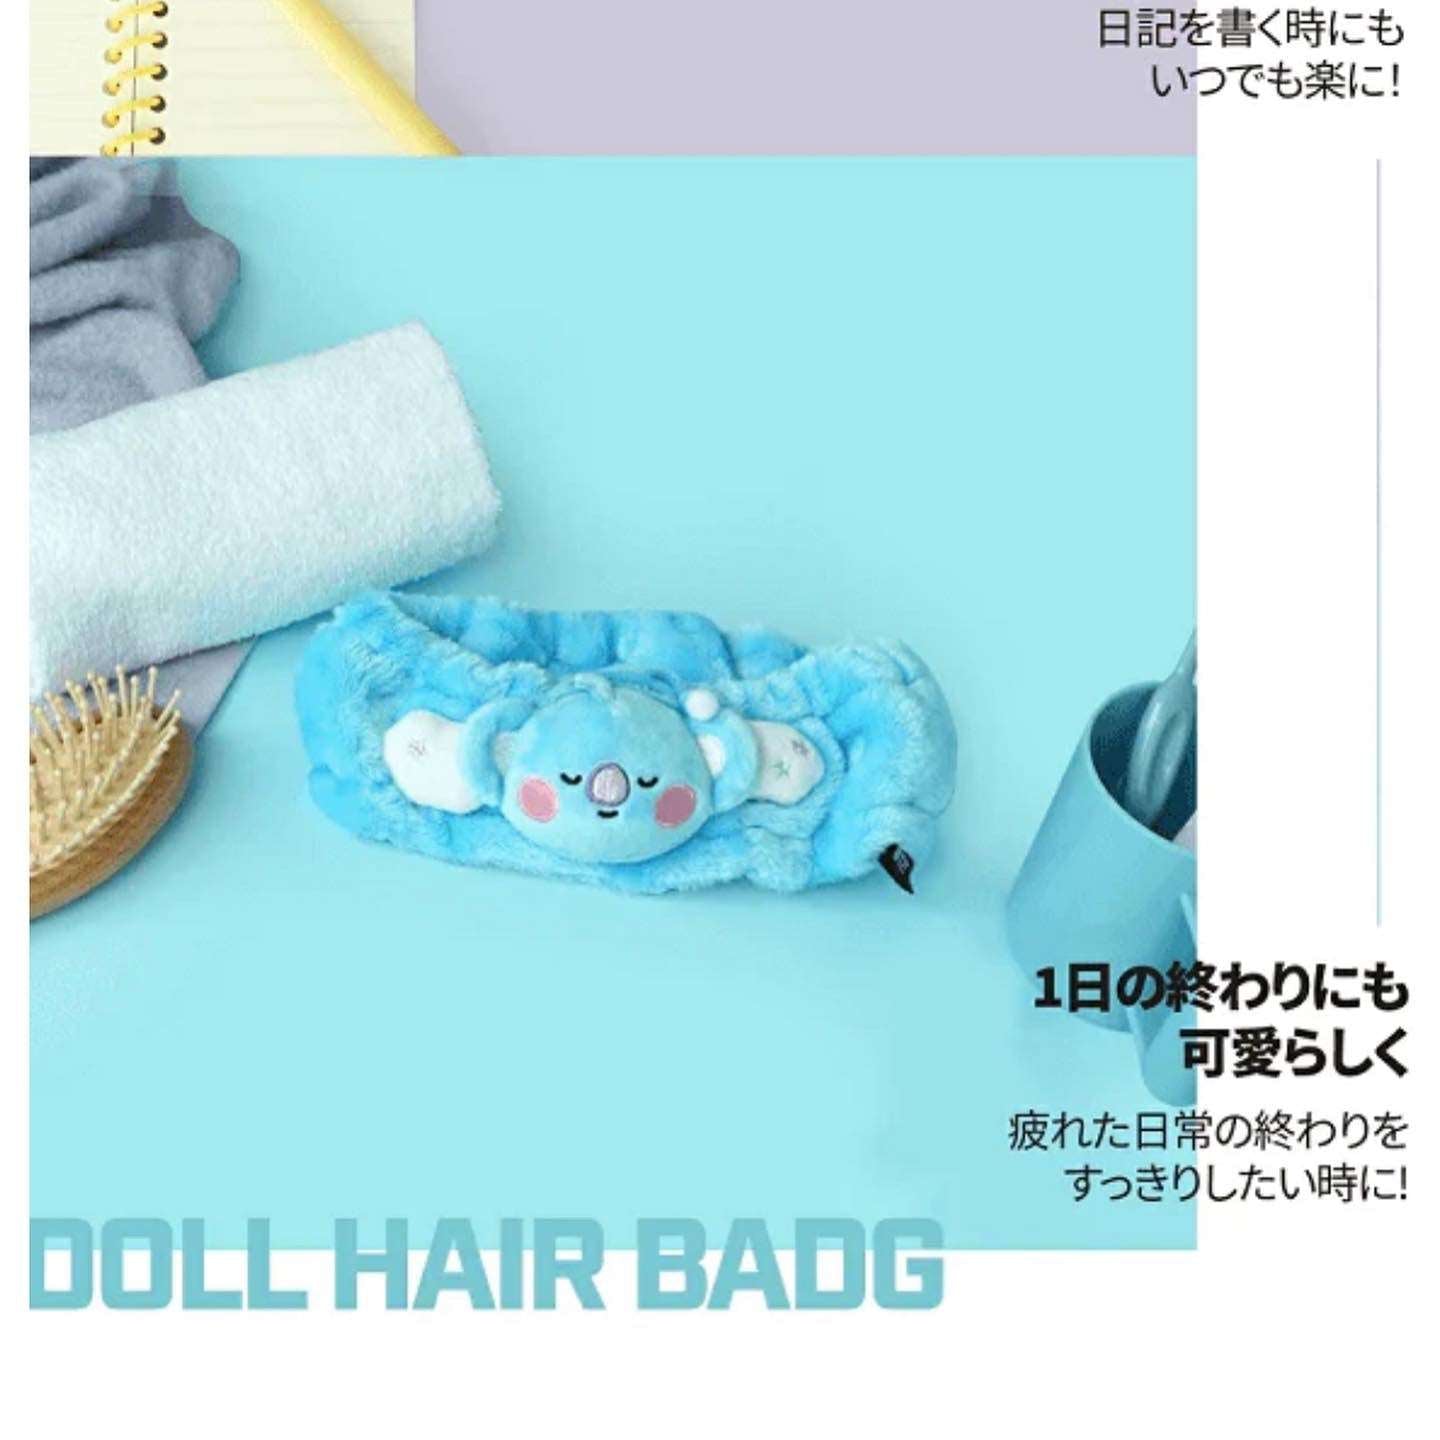 BT21 doll hairband - Korean Corner Canada